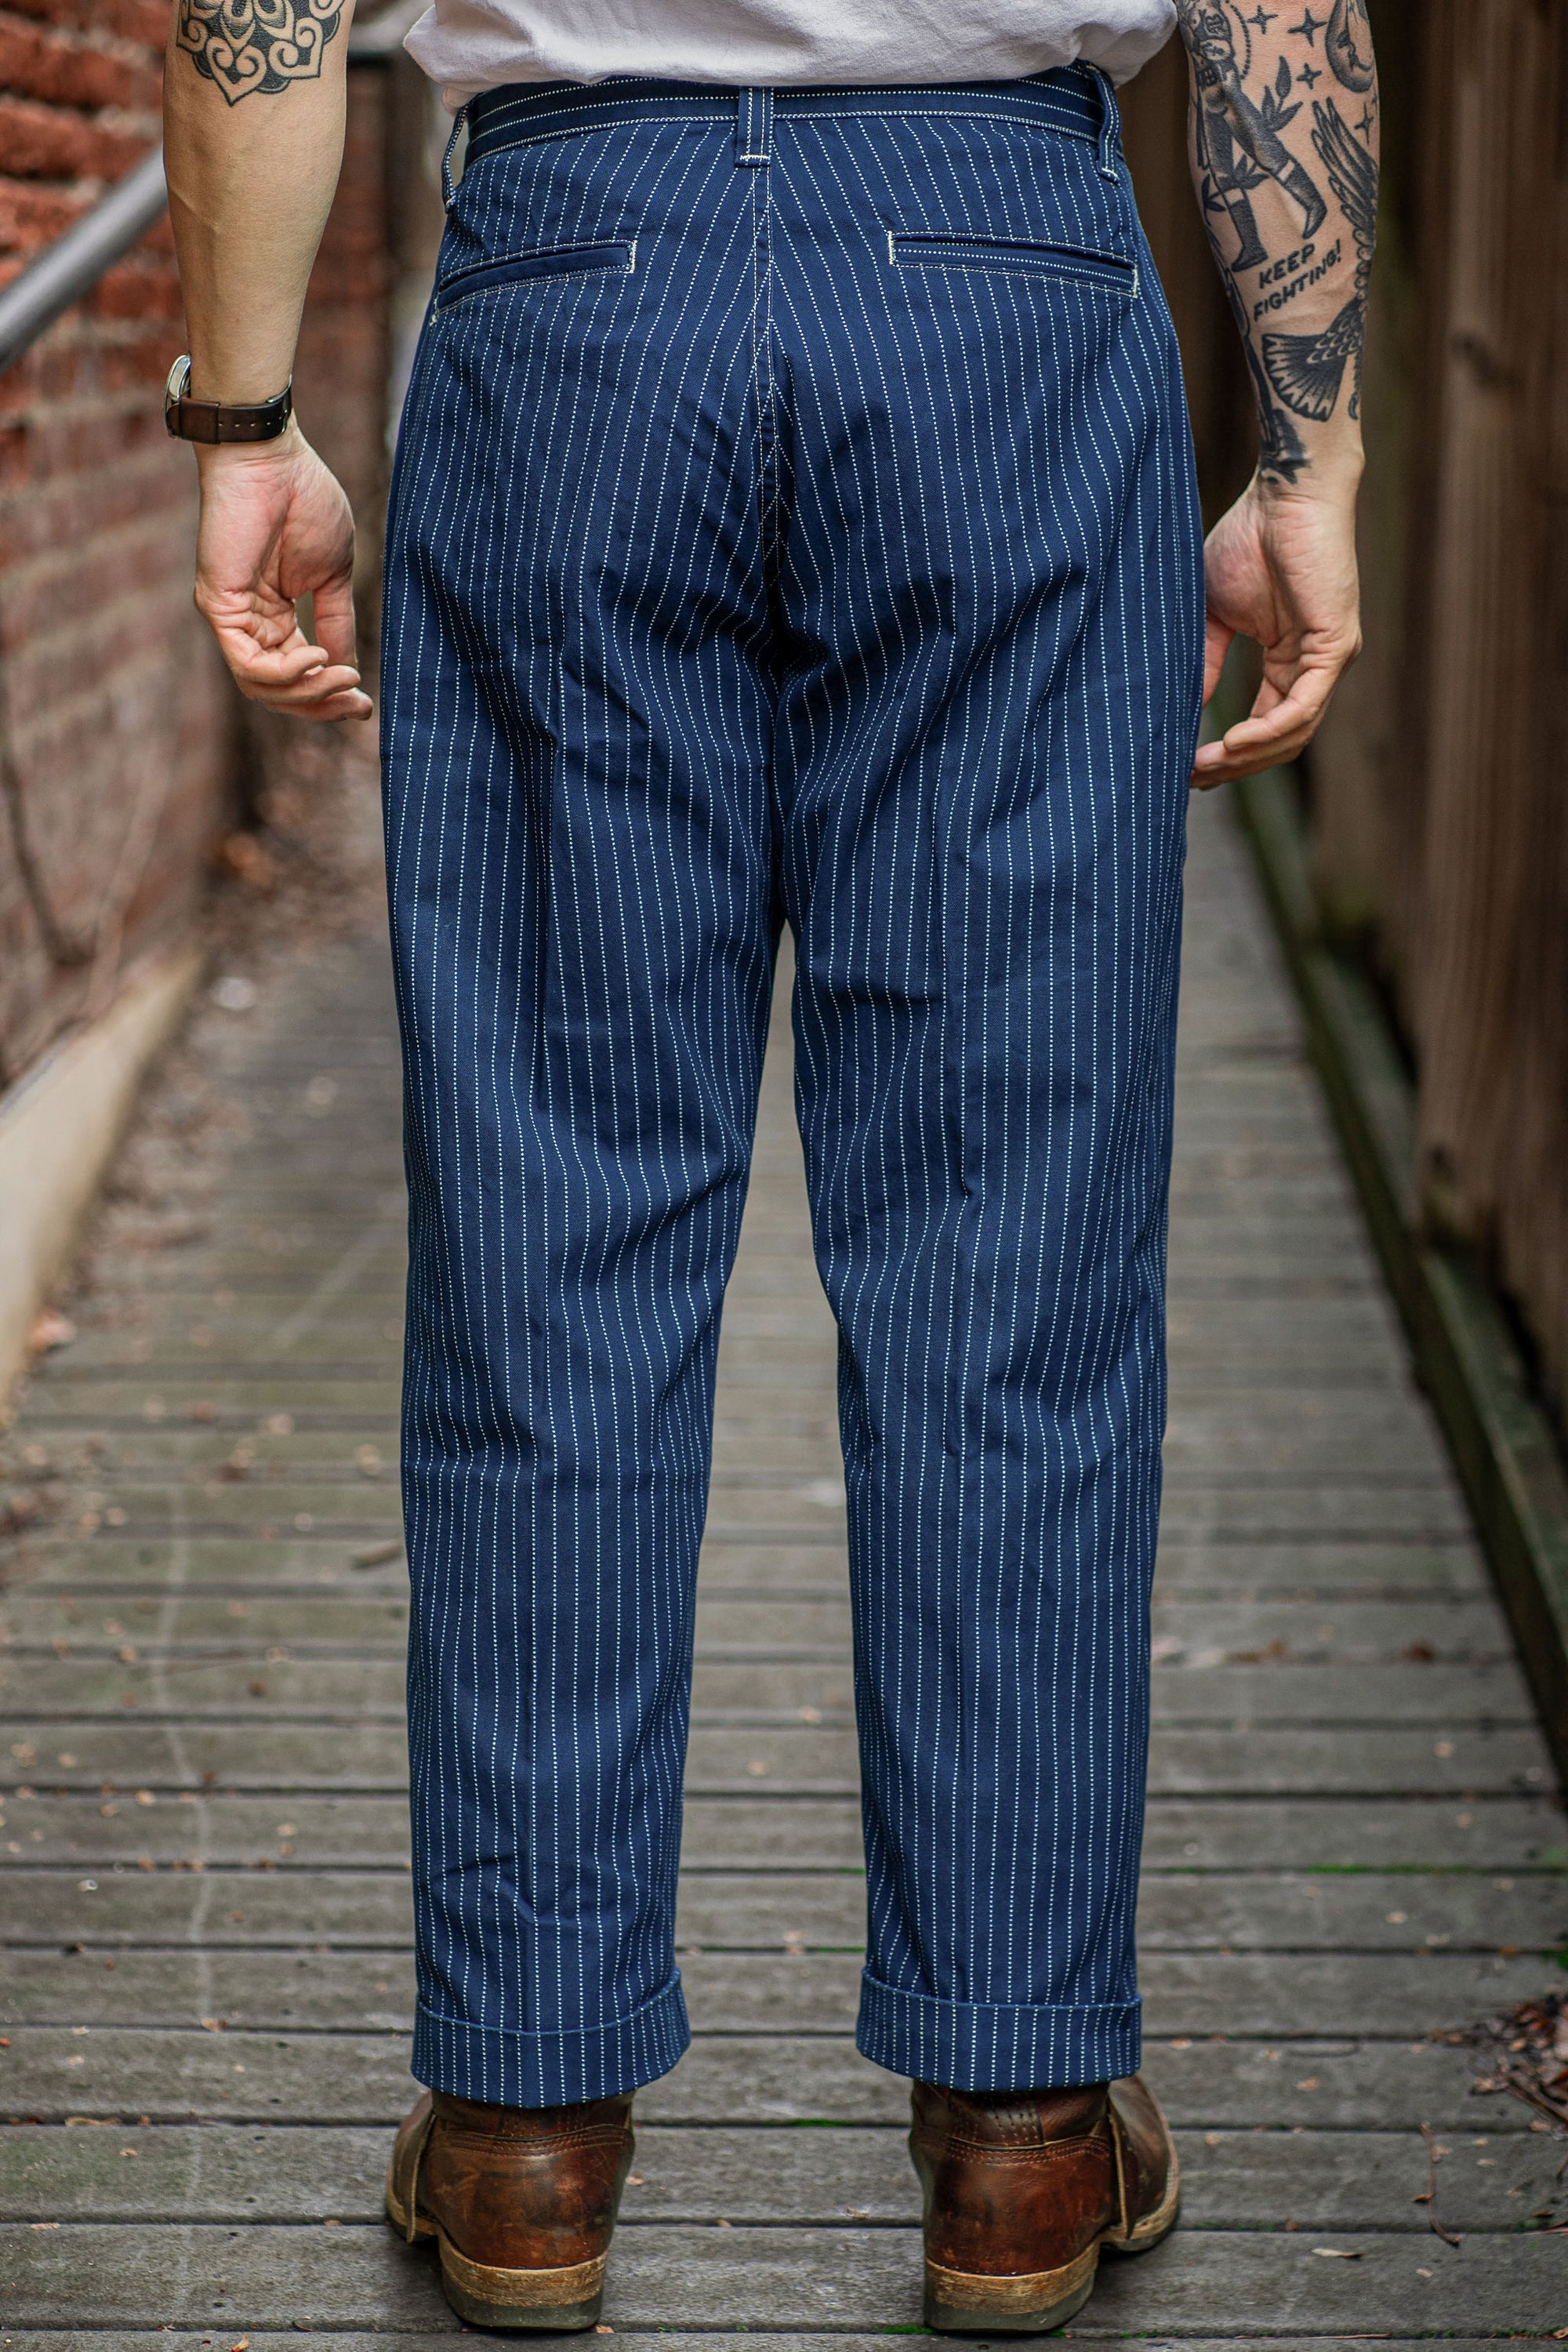 Trouser Length British Fold Length Trouser American Fold Original American  Length Pants Alteration - YouTube